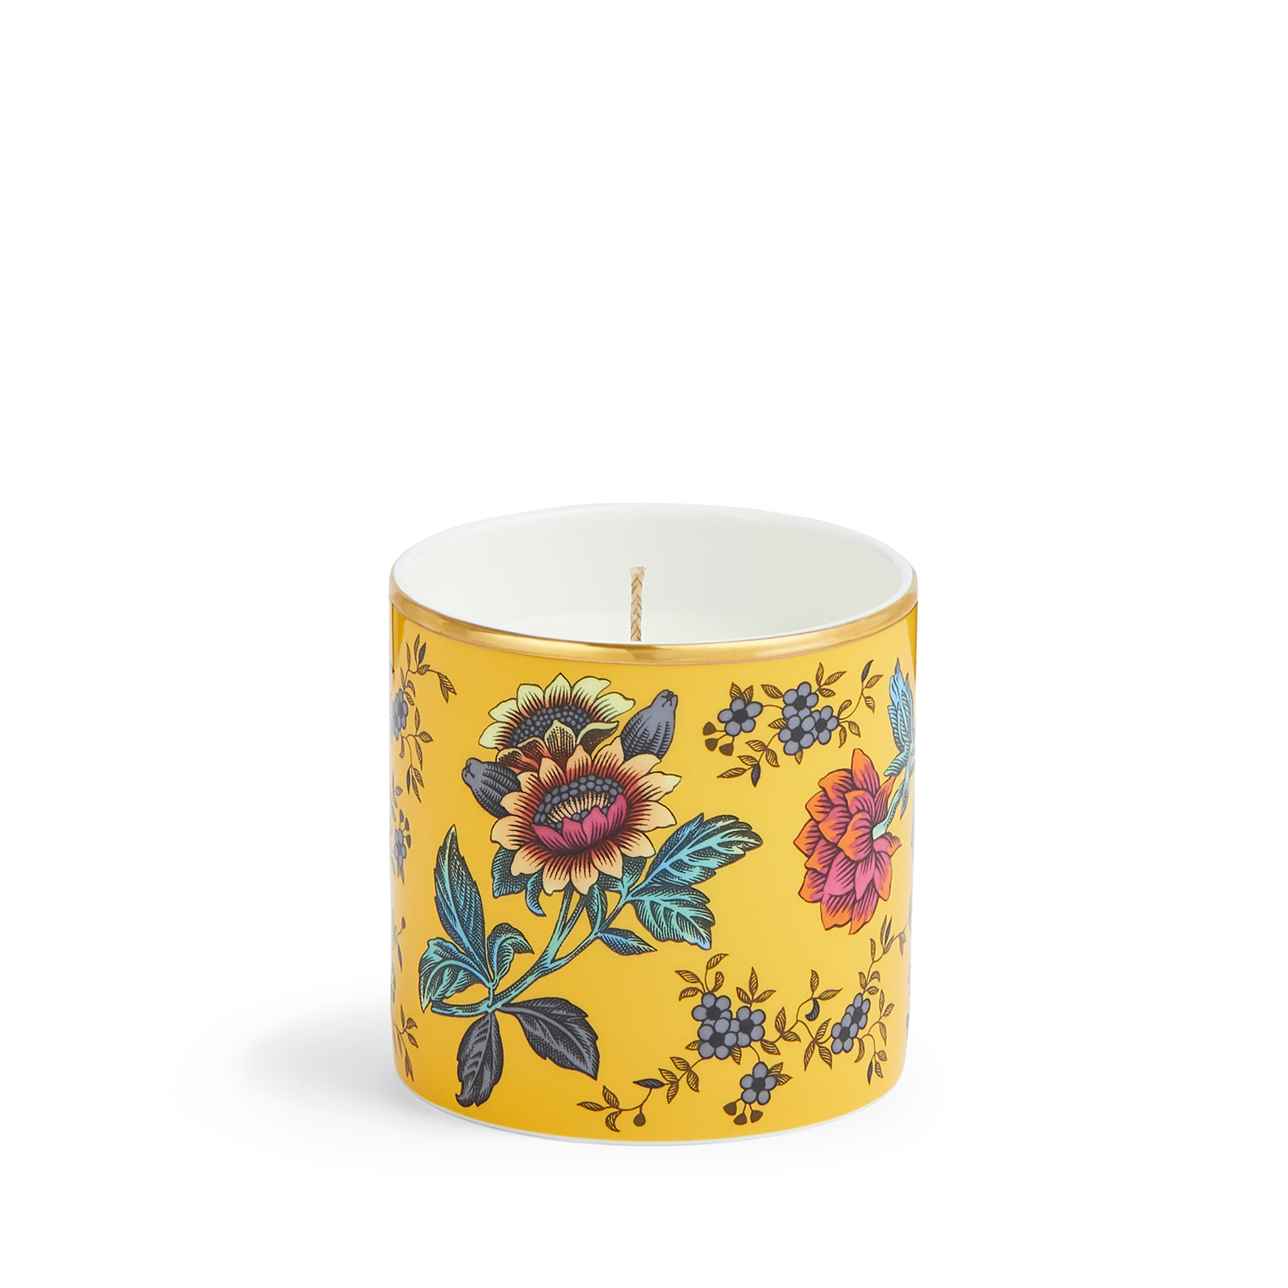 Wonderlust
Yellow Tonquin Candle